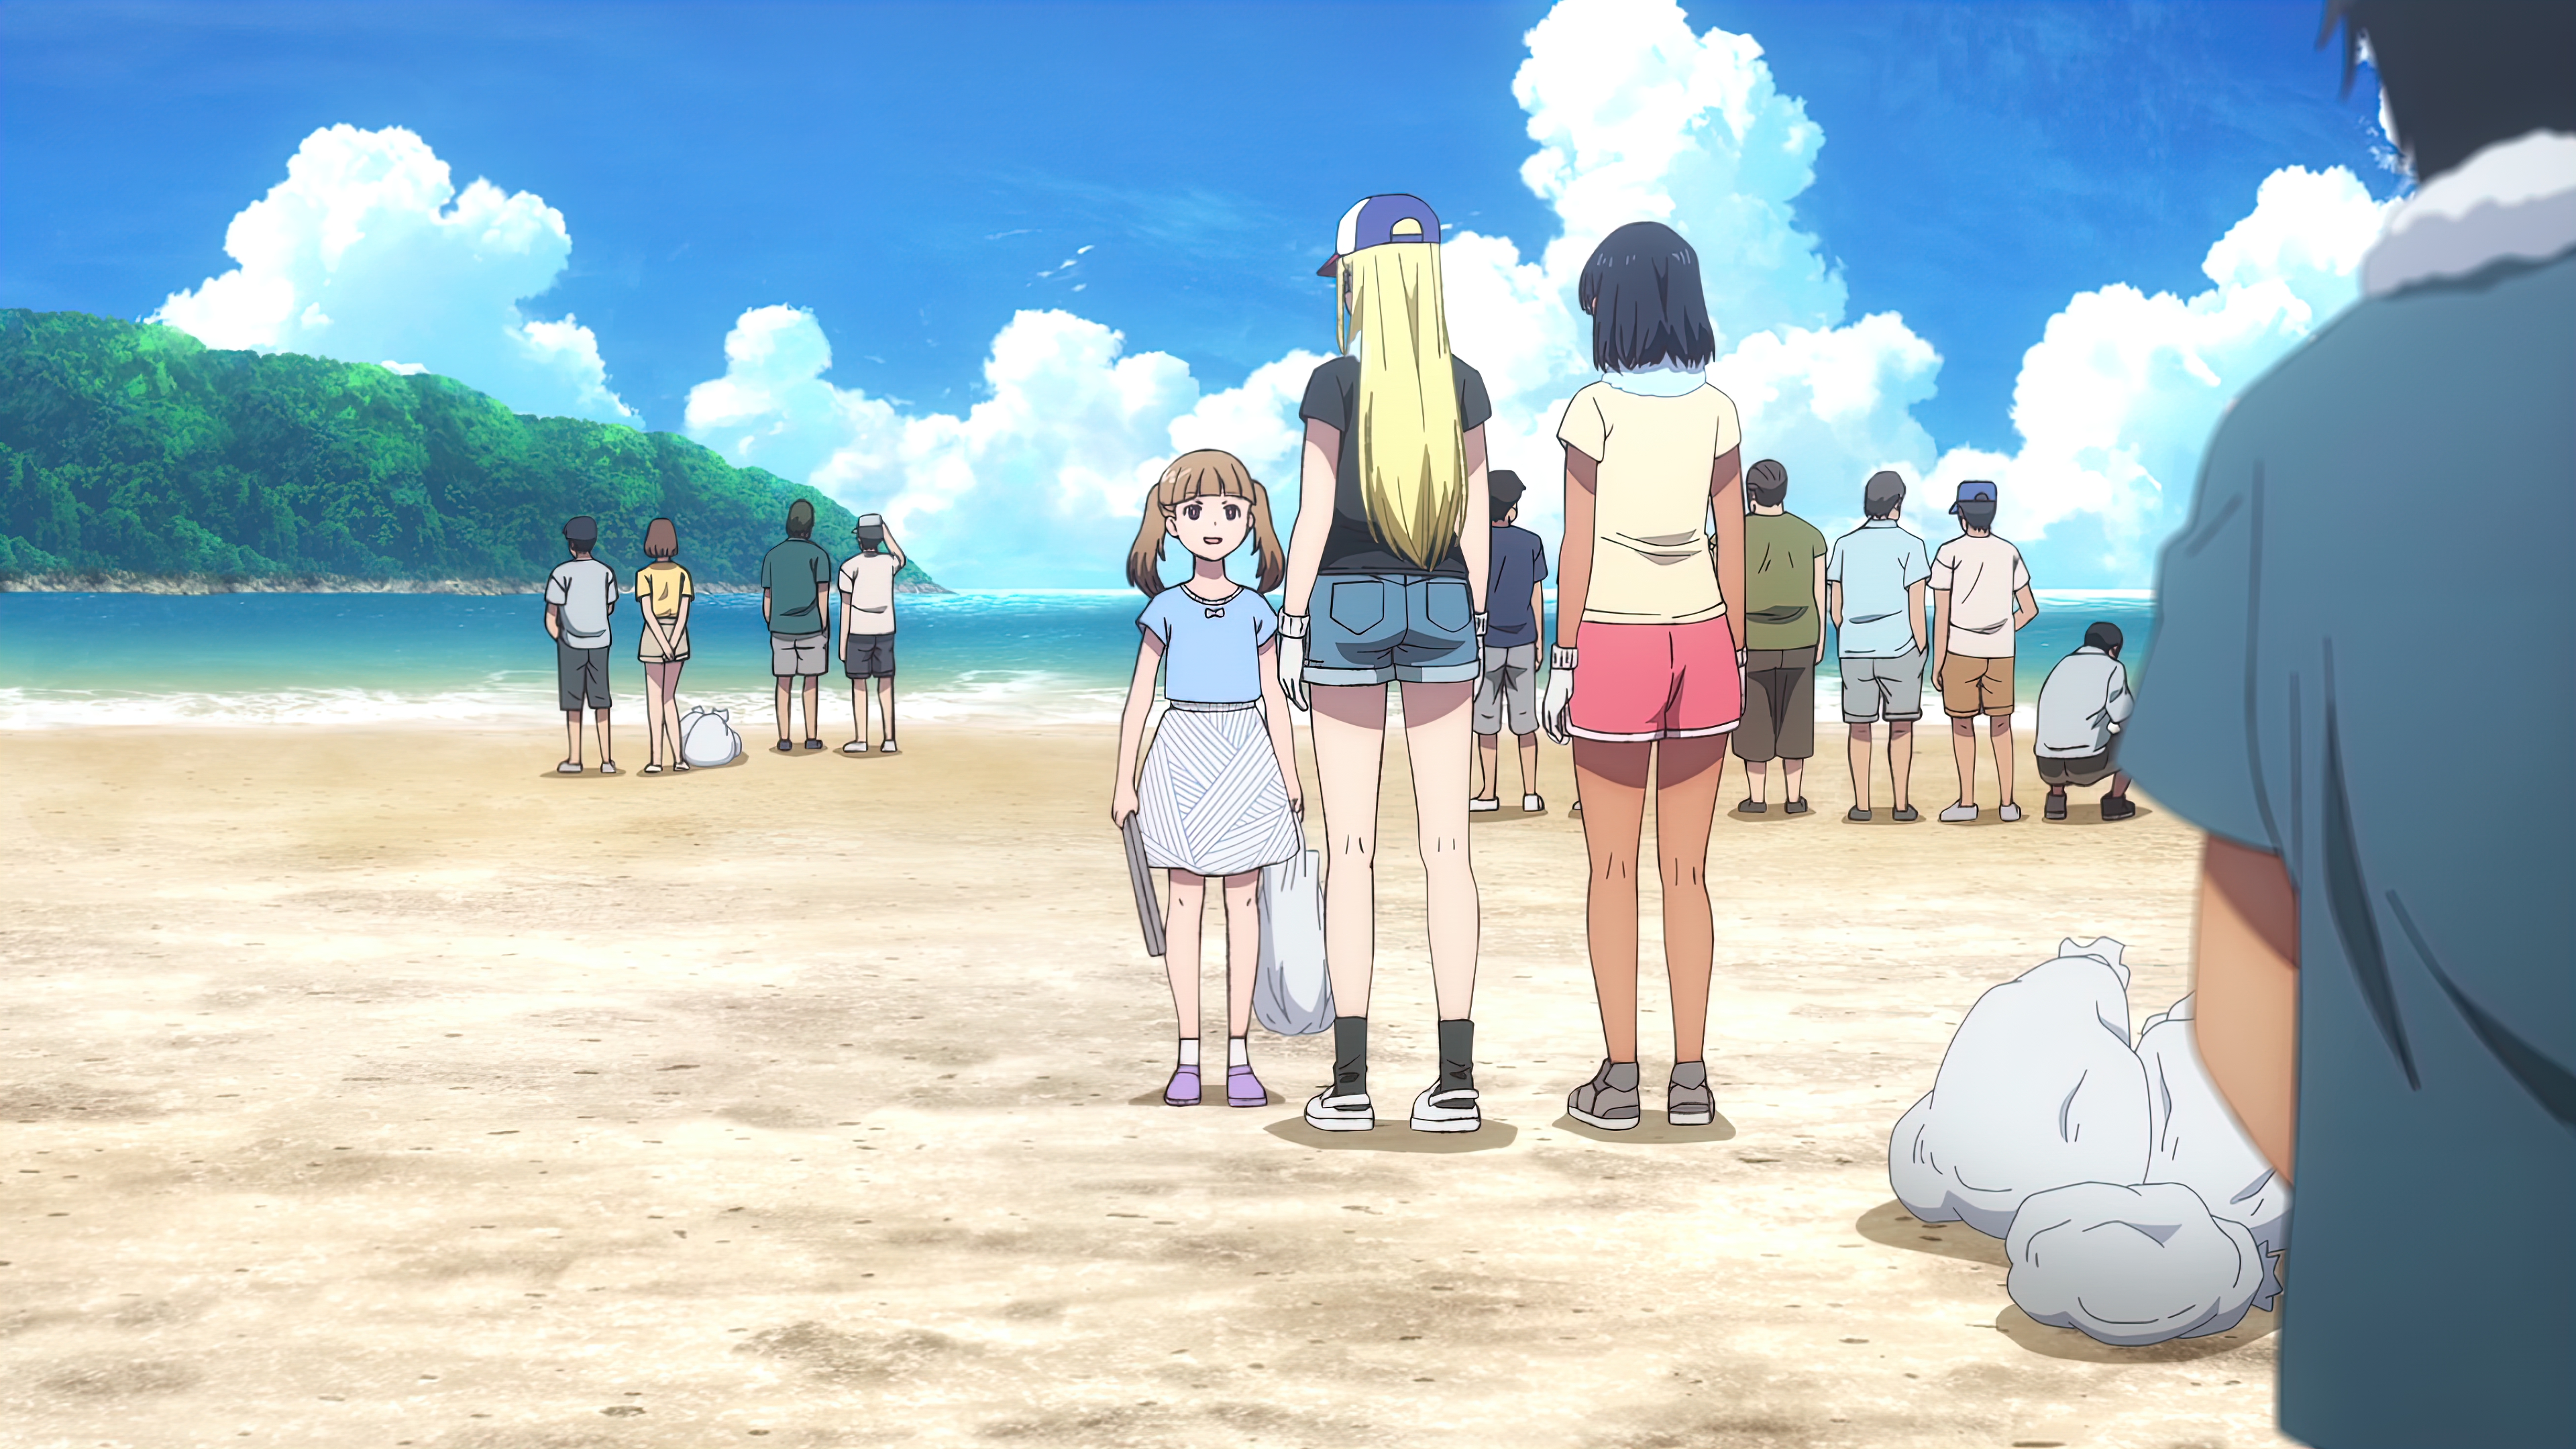 Summer Time Rendering 4K Anime Anime Girls Anime Boys Beach Water Clouds Anime Screenshot 3840x2160